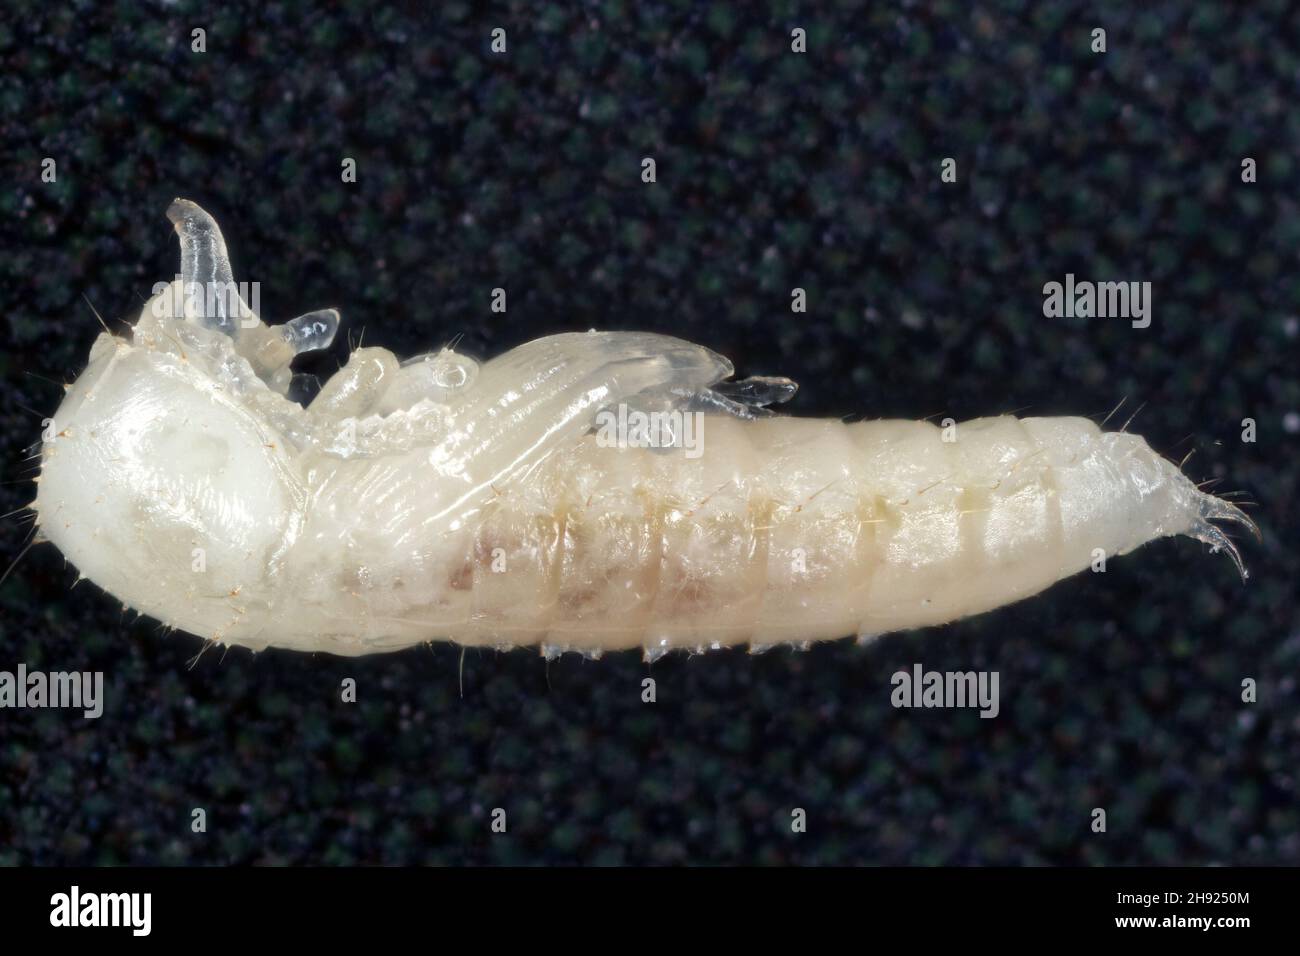 Pupa of Broad-horned flour beetle: Gnatocerus cornutus - is a stored pest. Stock Photo